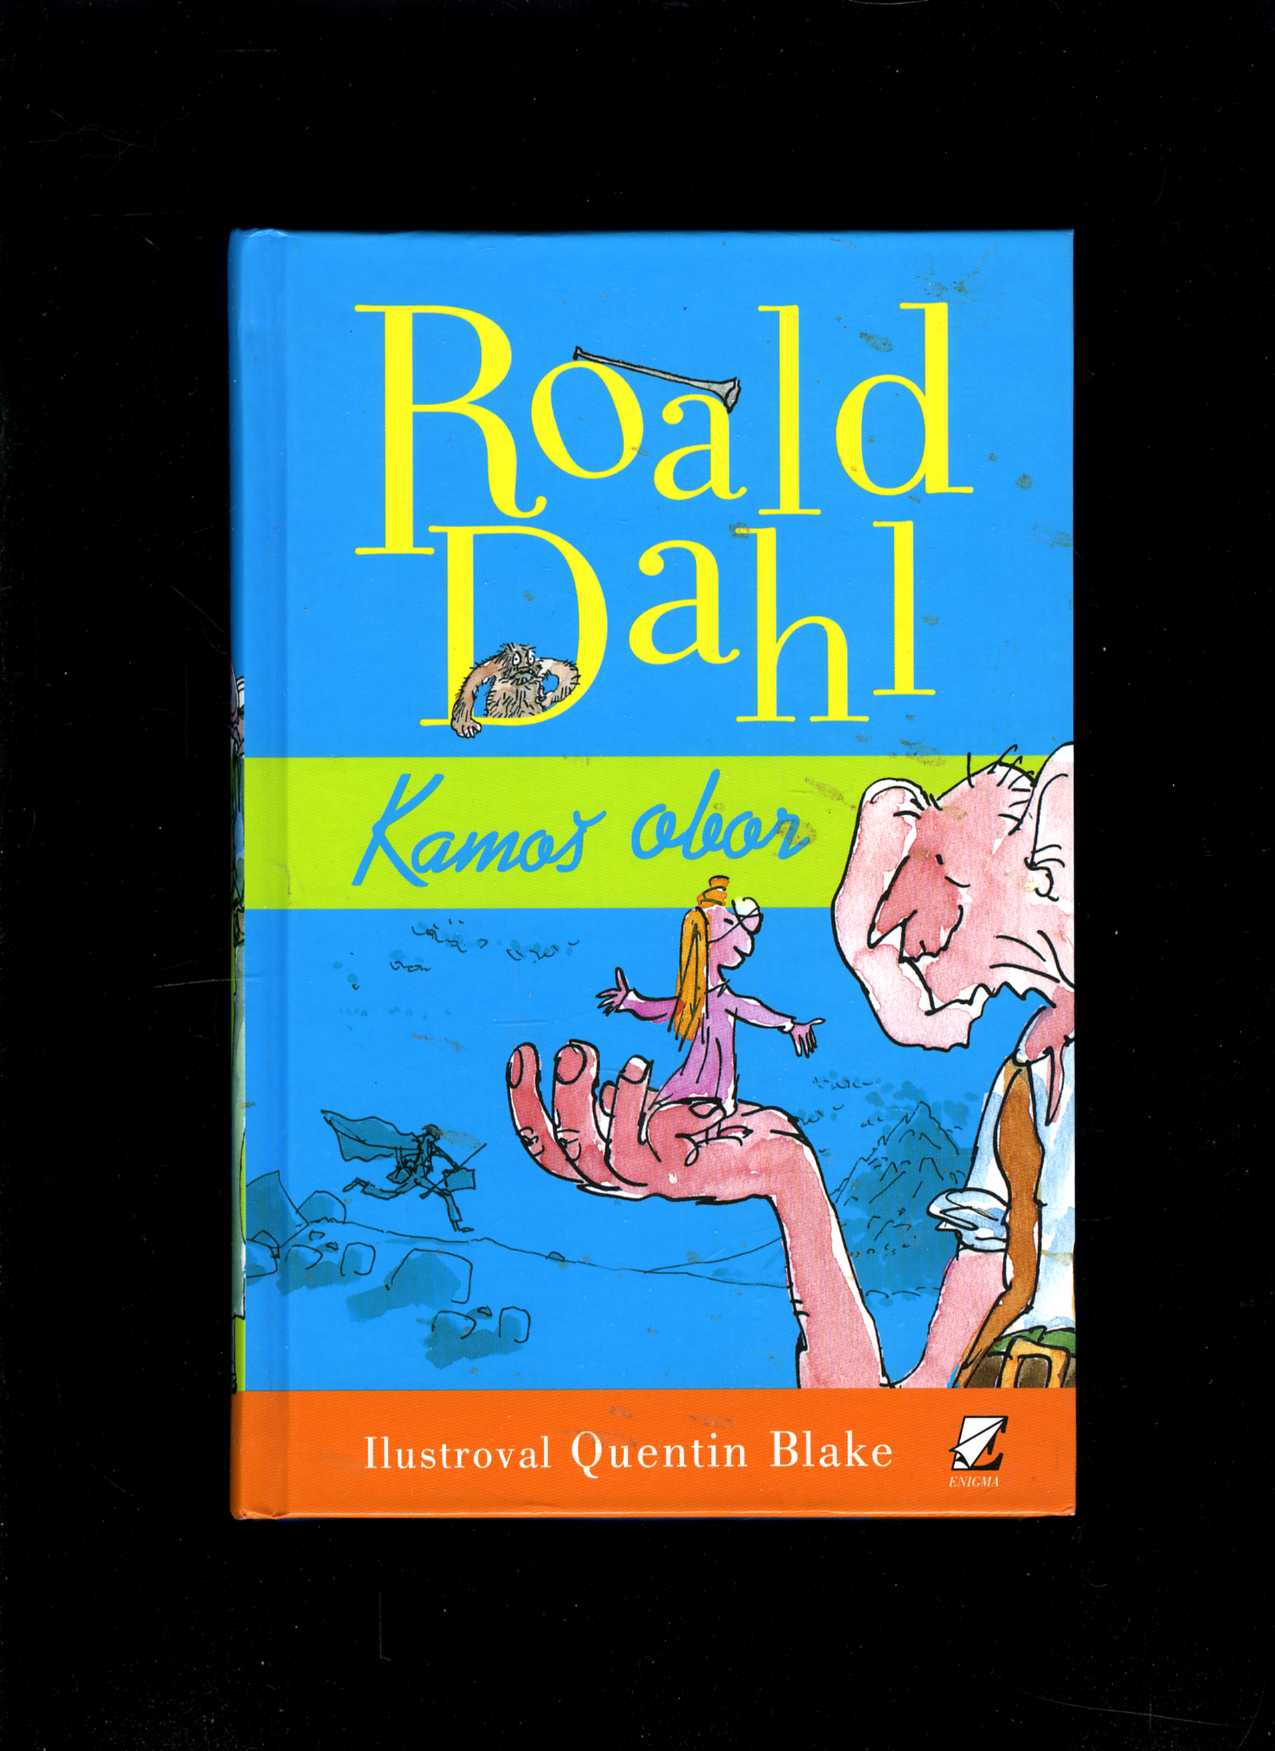 Kamoš obor (Roald Dahl)